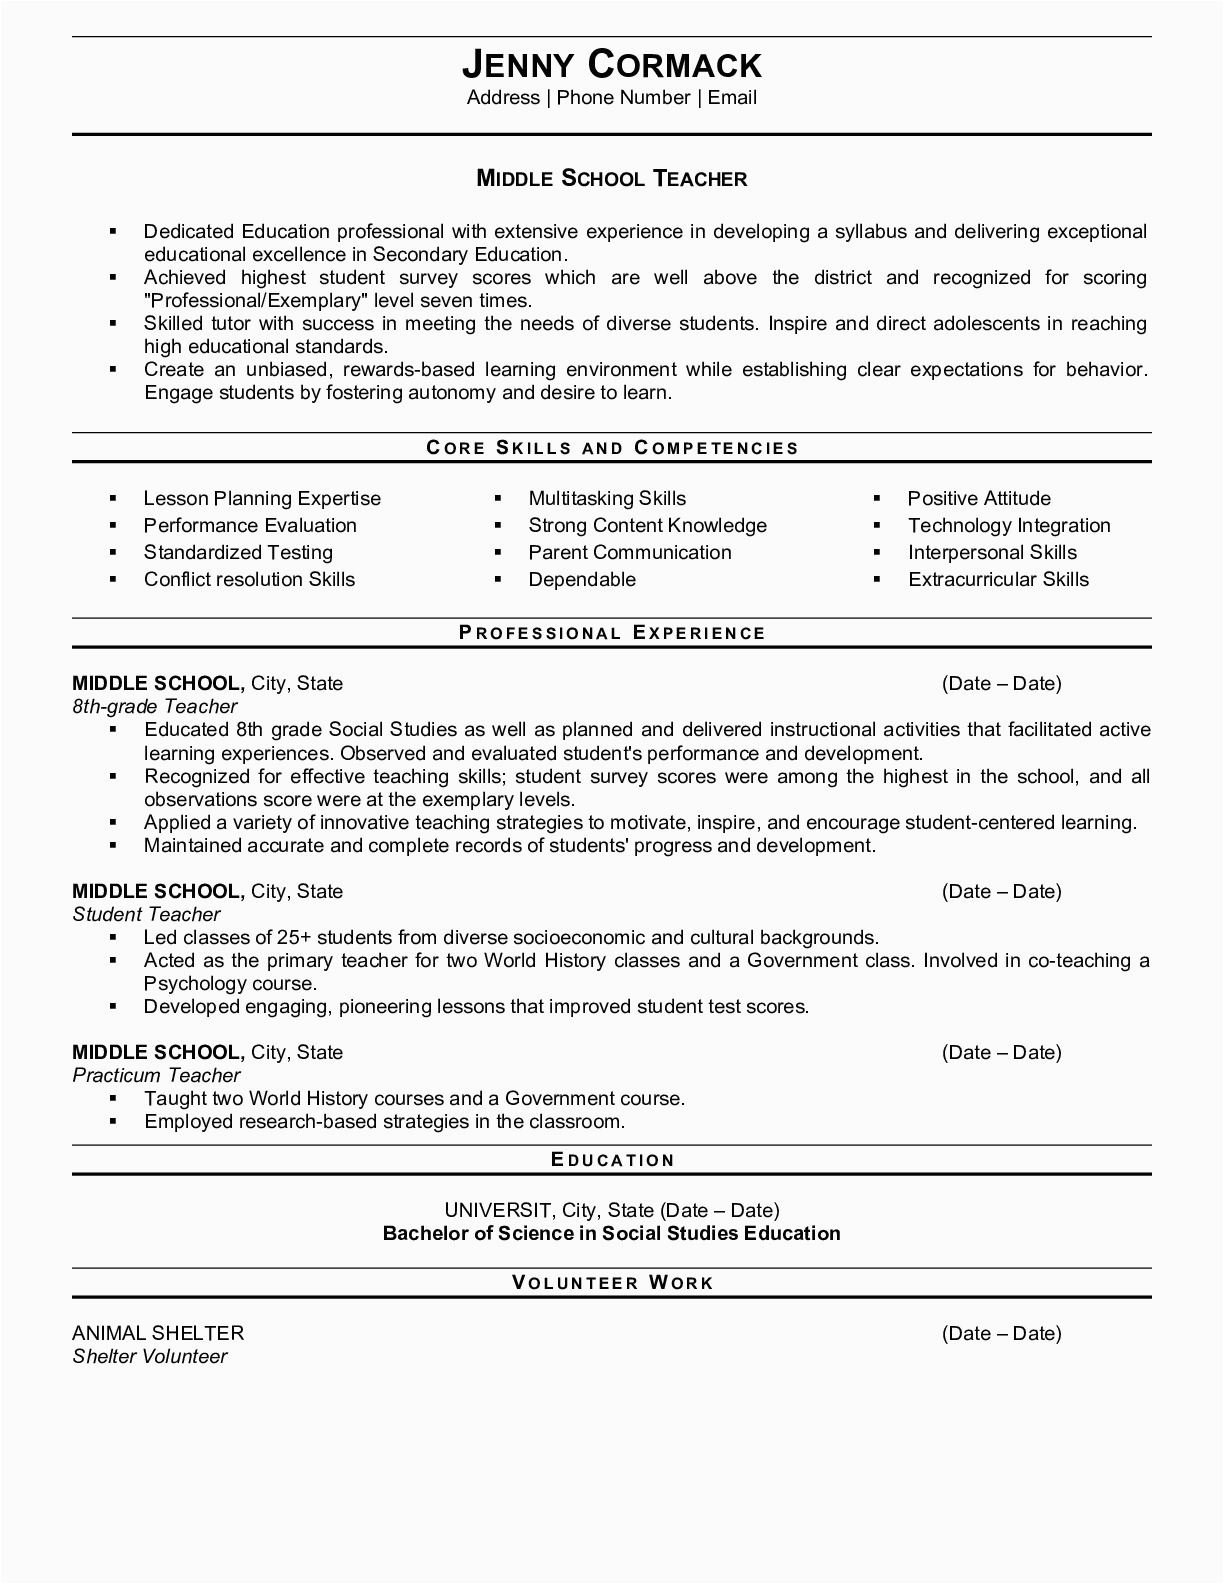 Resume Sample for Middle School Teacher Middle School Teacher Resume Examples